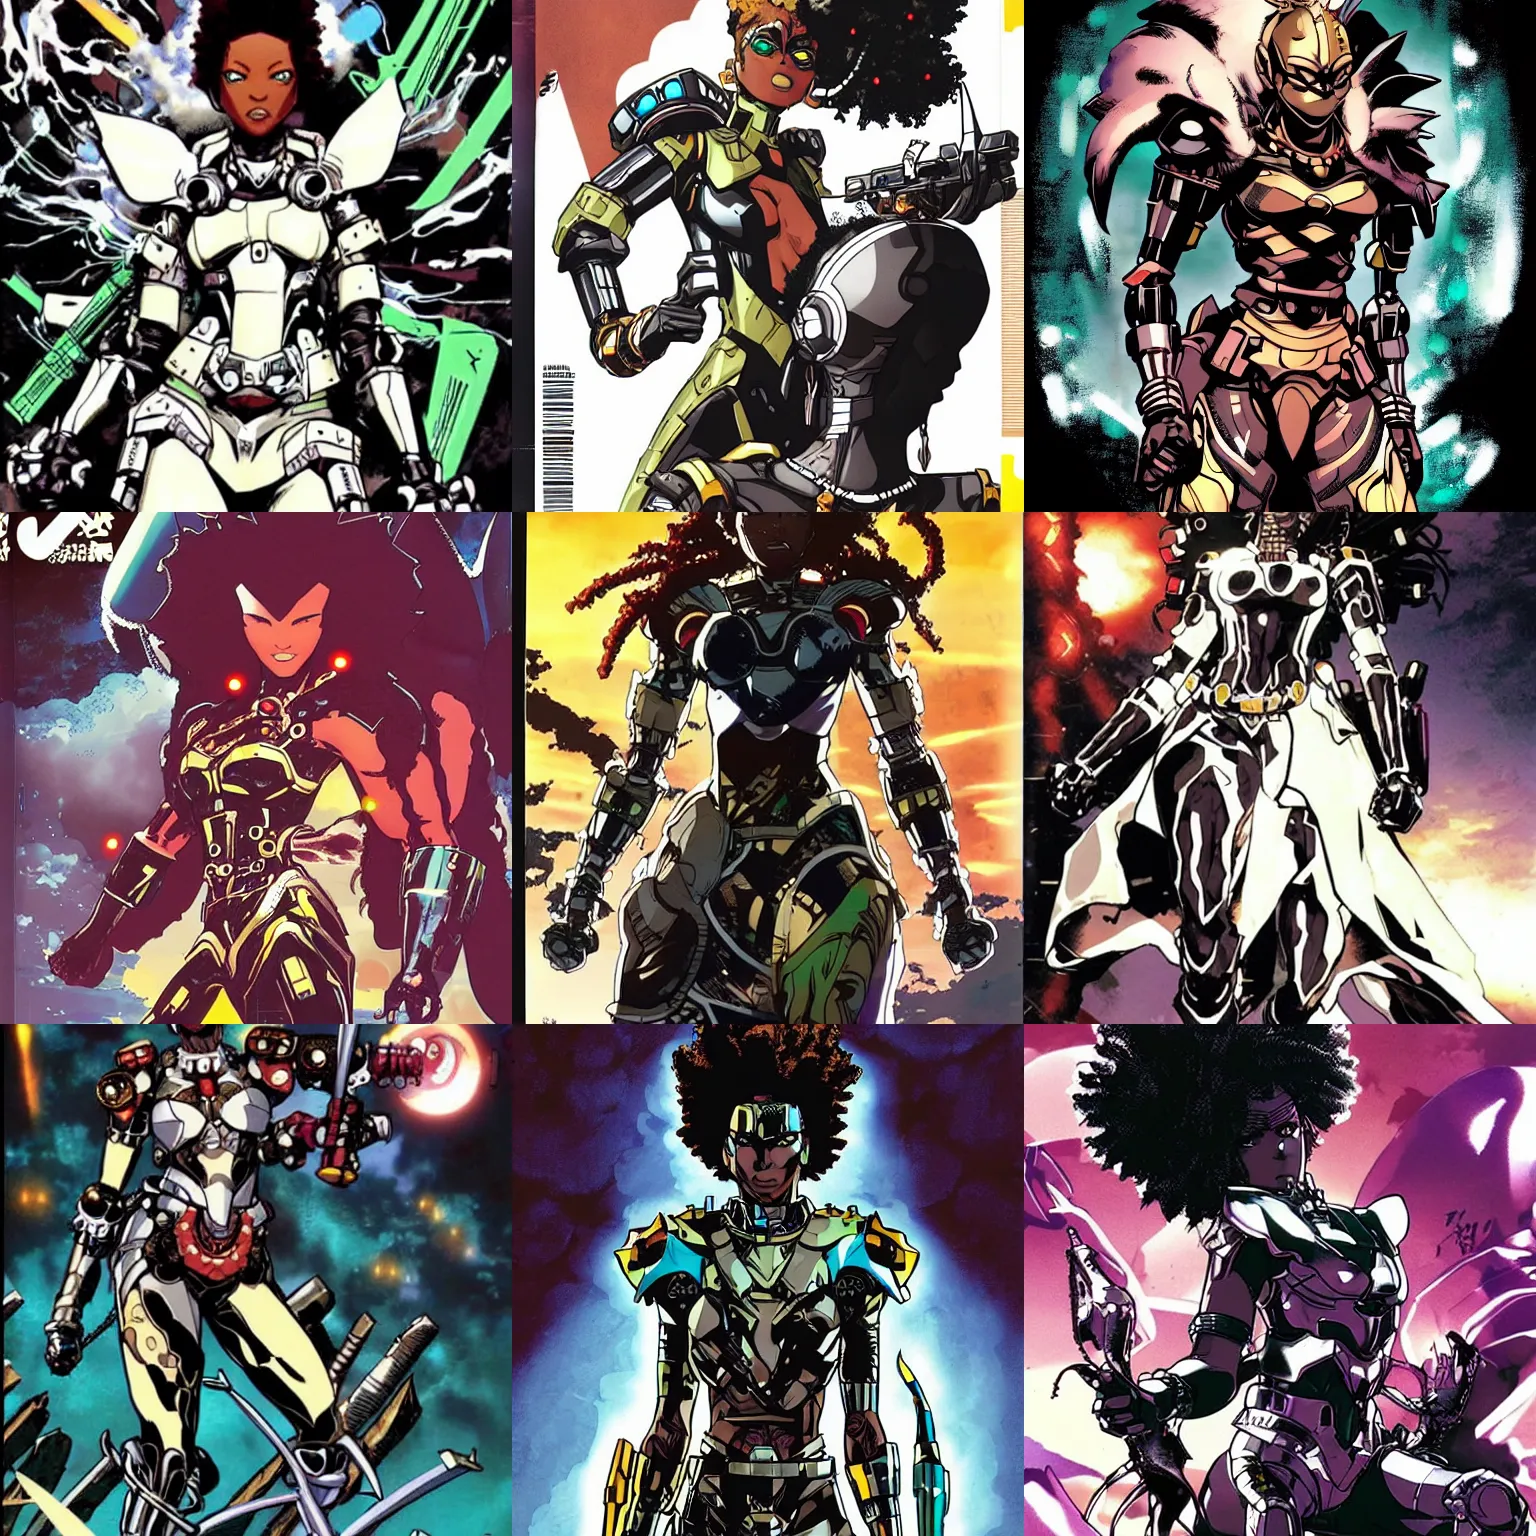 Prompt: afro futuristic manga cover art of a cyborg Wakandan warrior queen, epic composition by Yoji shinkawa and Mike Mignola,